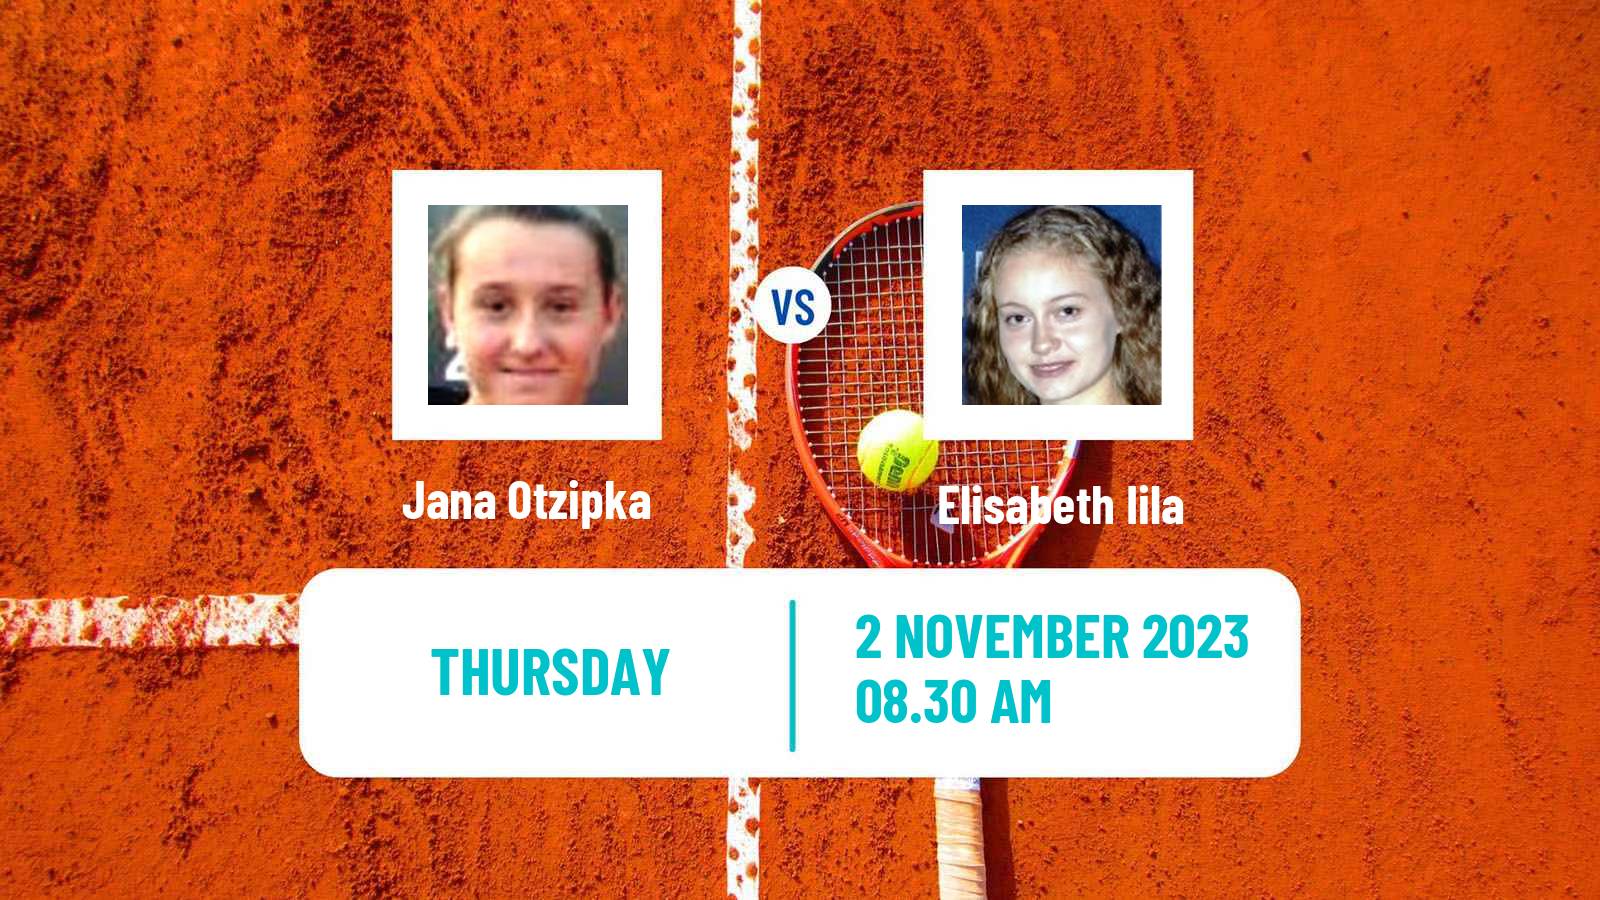 Tennis ITF W15 Nasbypark Women Jana Otzipka - Elisabeth Iila